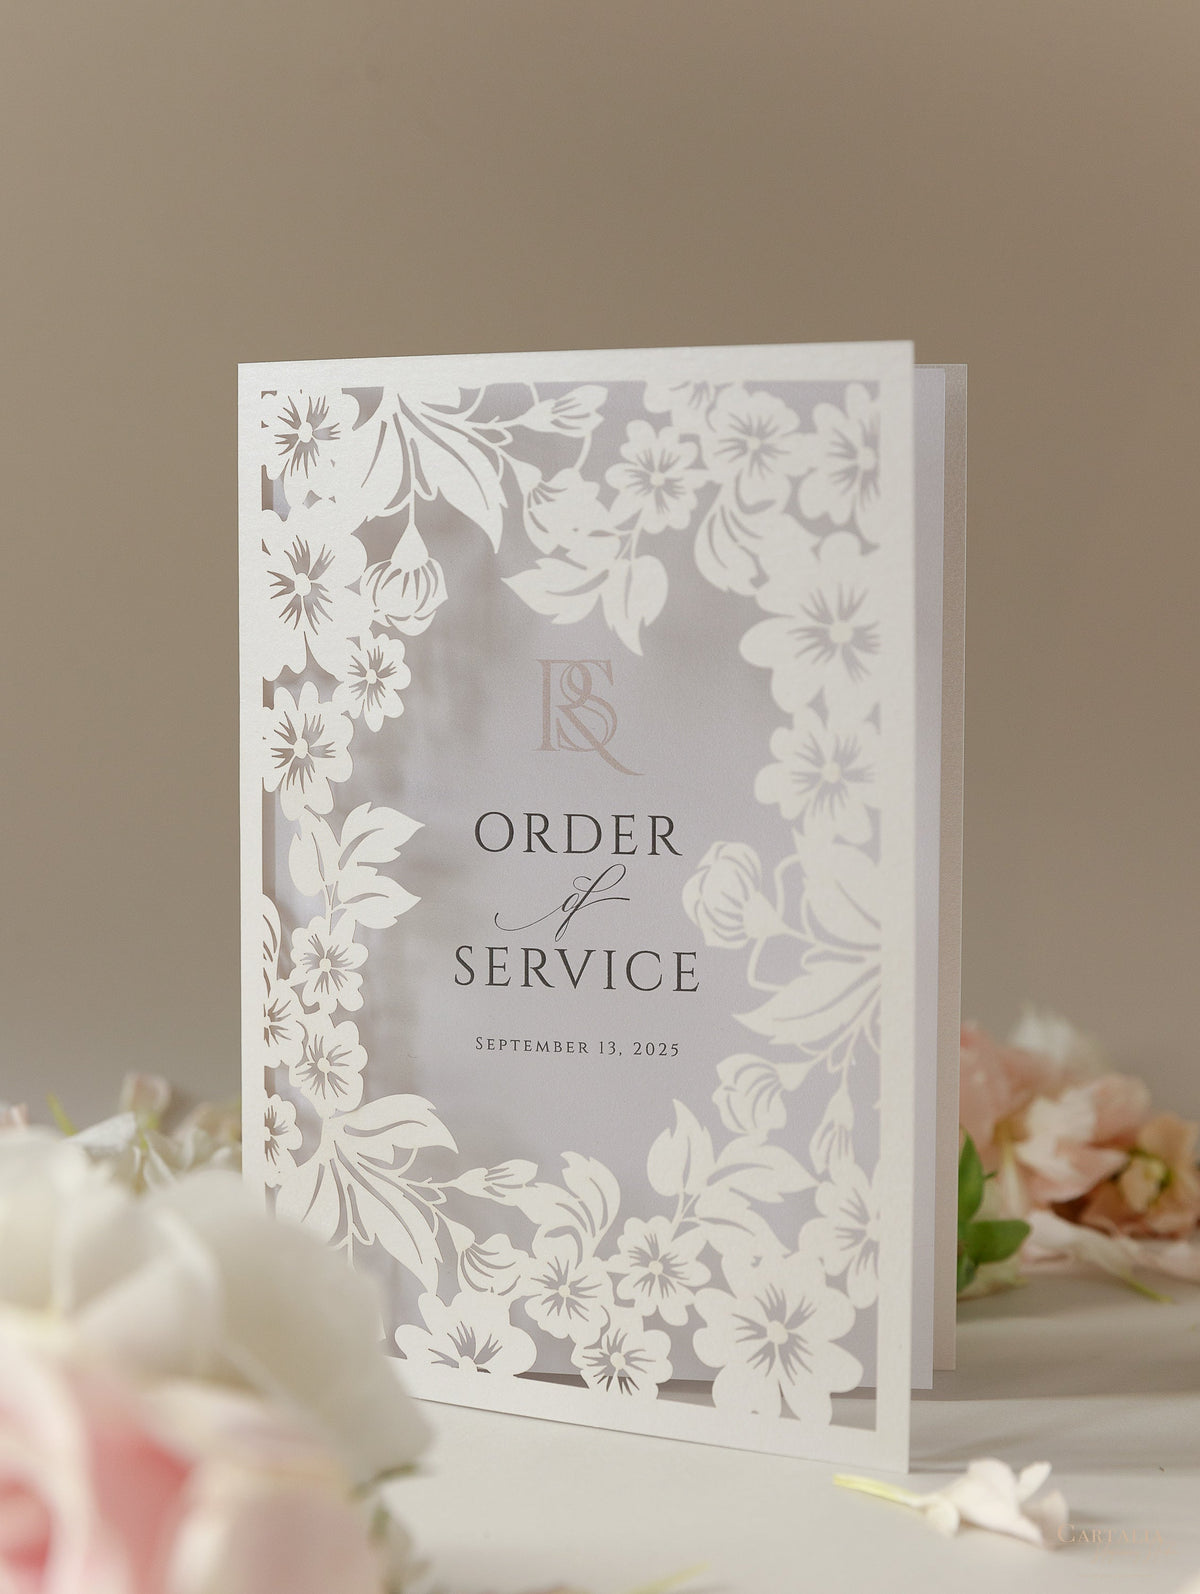 Romántico detalle floral cortado con láser Orden de servicio